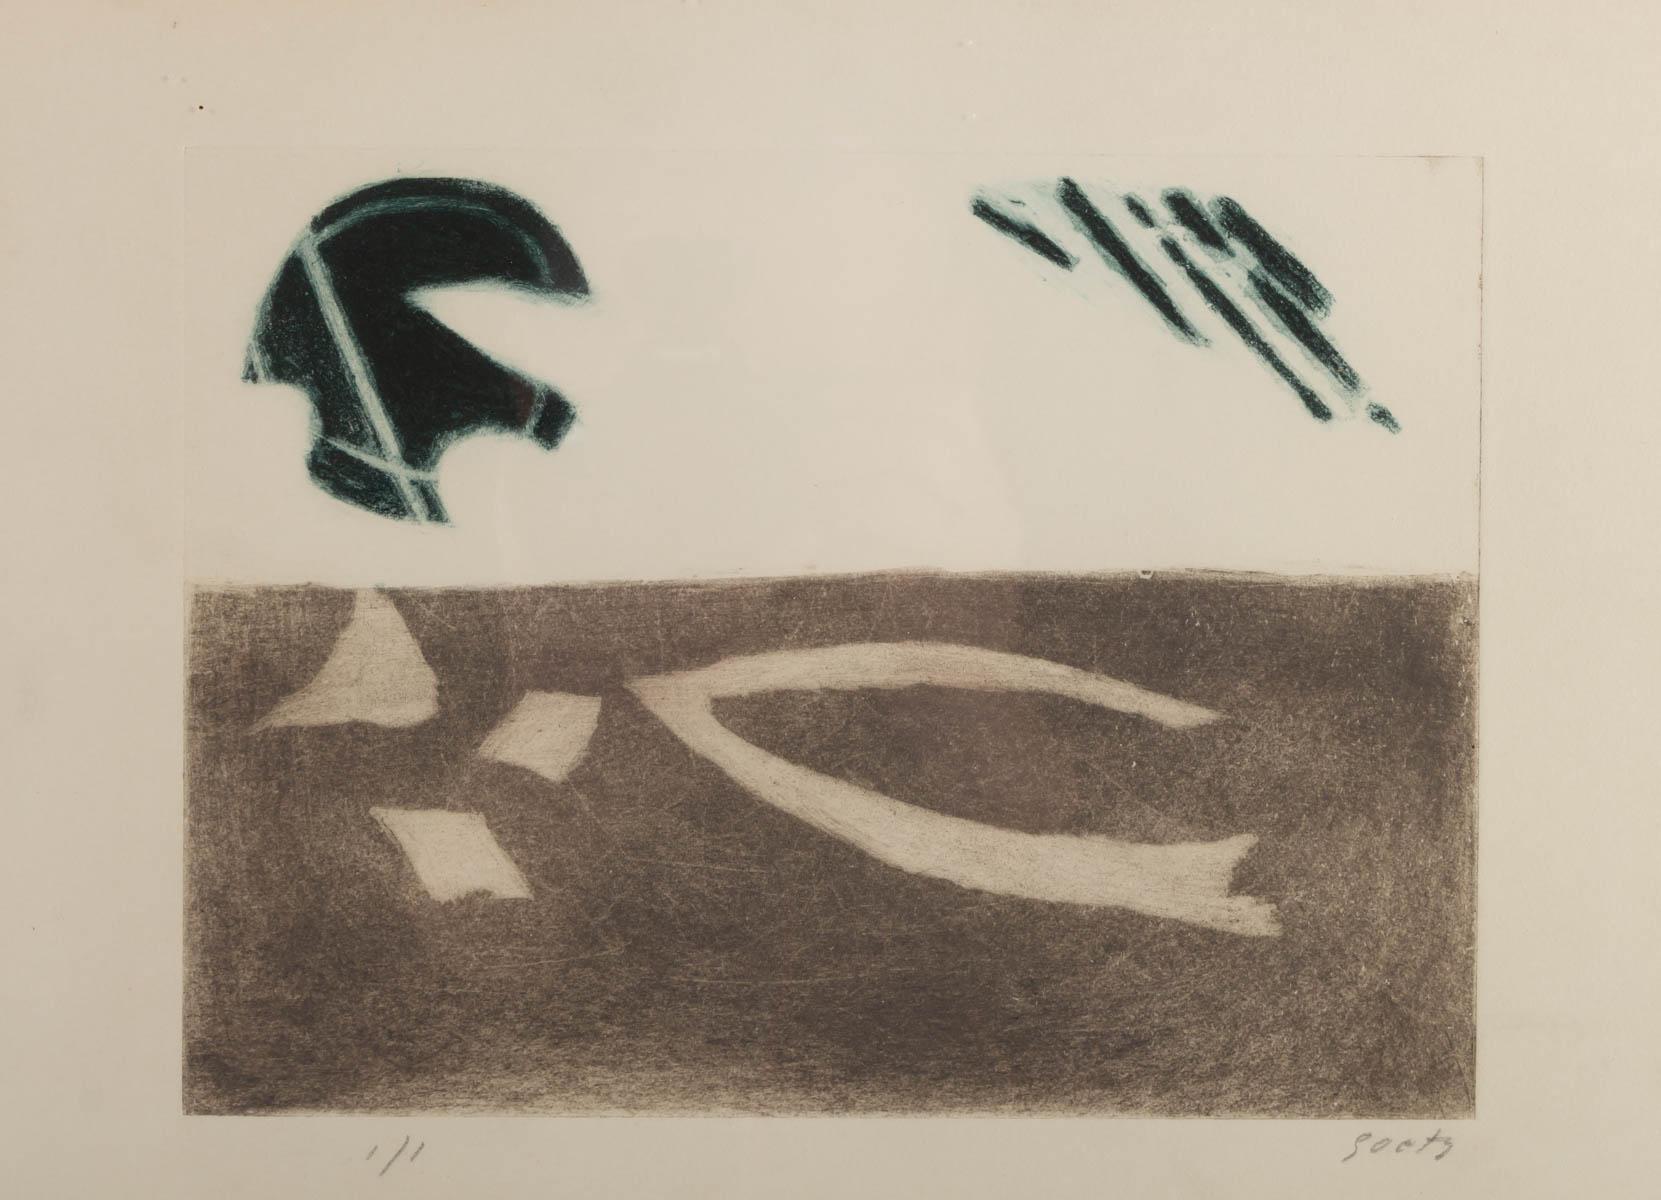 Lithography by Henri Goetz, 75/100, signed.
Measures: H 41.5 cm, L 51.5 cm, W 1 cm.